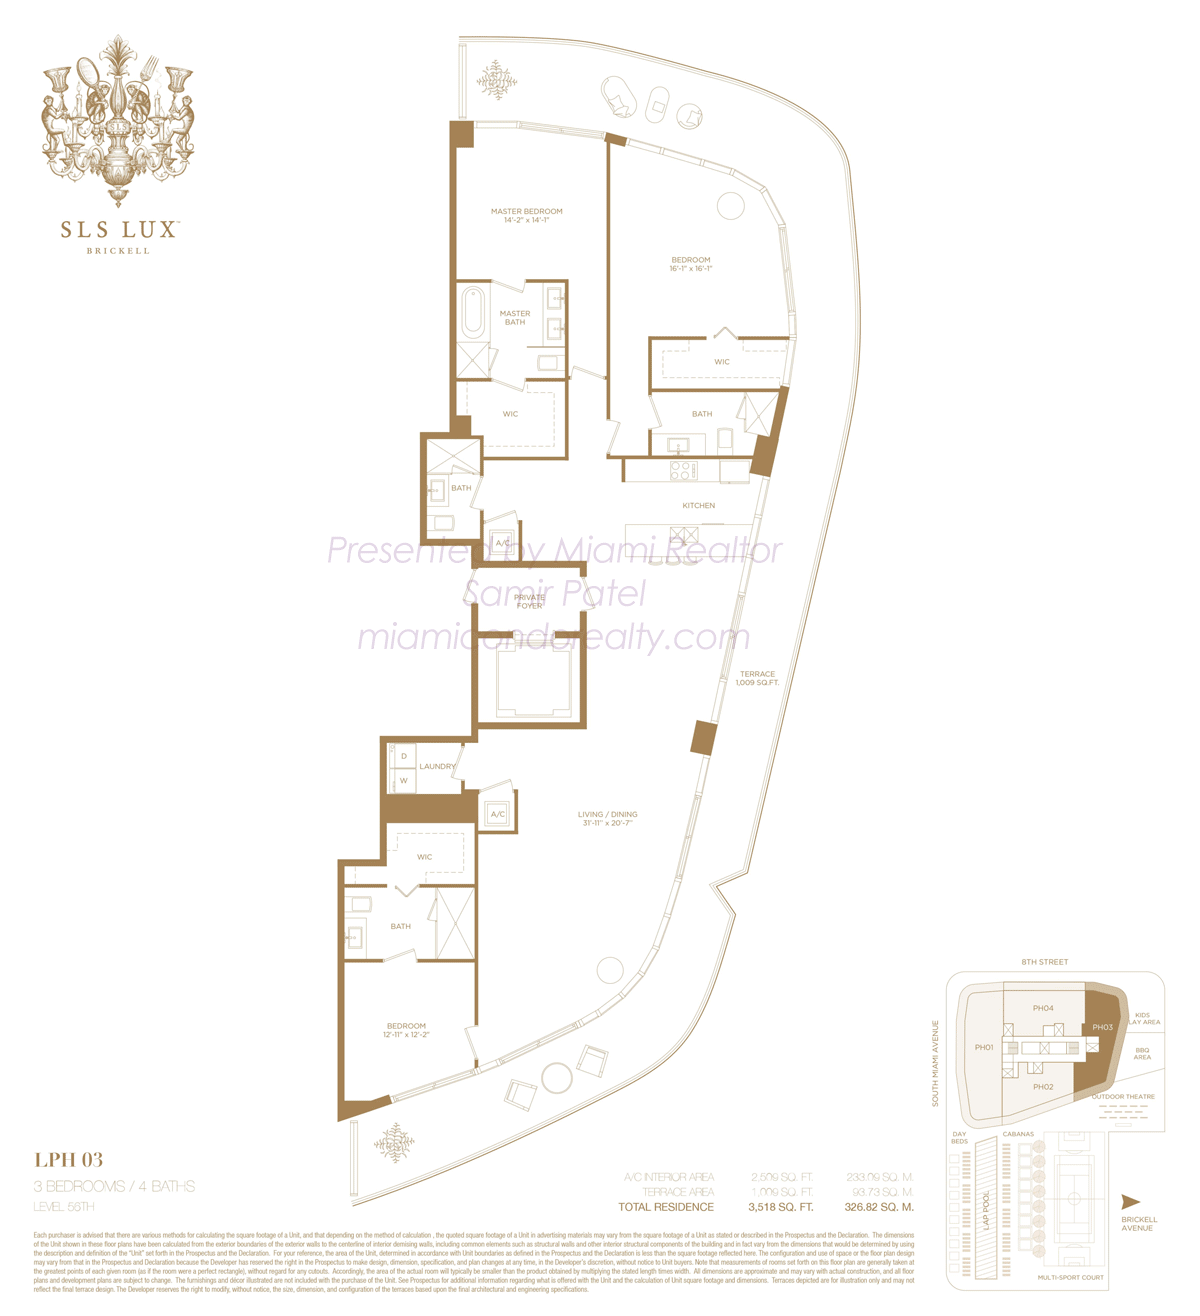 SLS LUX Brickell Lower Penthouse 03 Floorplan